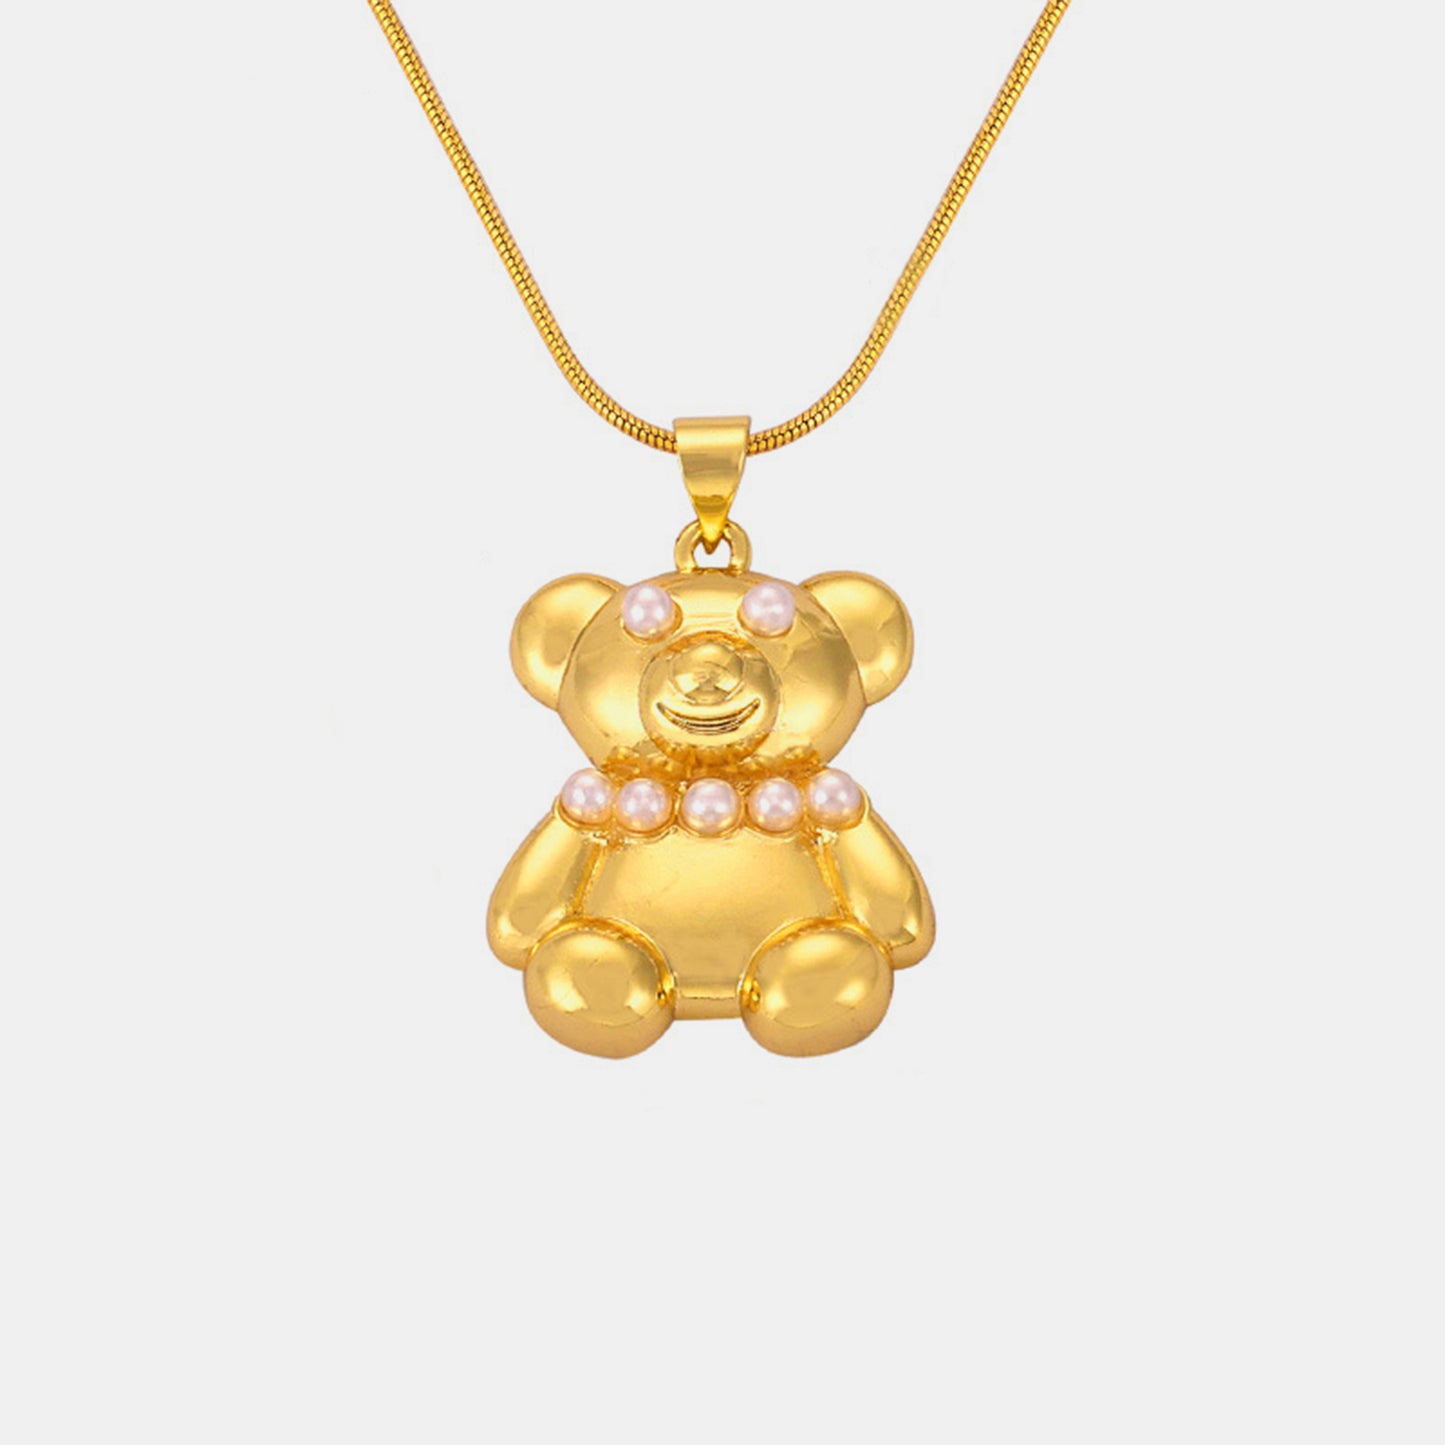 TEEK - Titanium Steel Gold-Plated Bear Pendant Necklace JEWELRY TEEK Trend Style D  